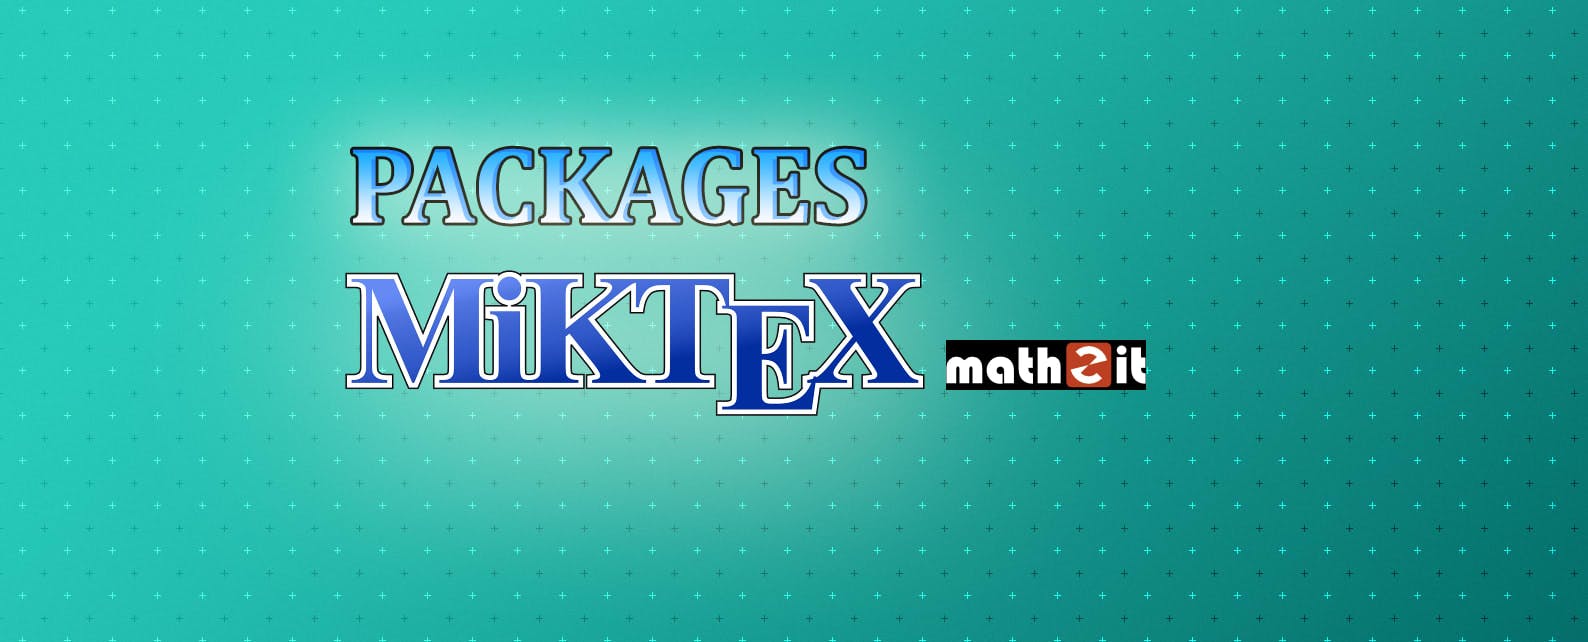 Thiếu packages MikTeX - Hướng dẫn sửa nhanh